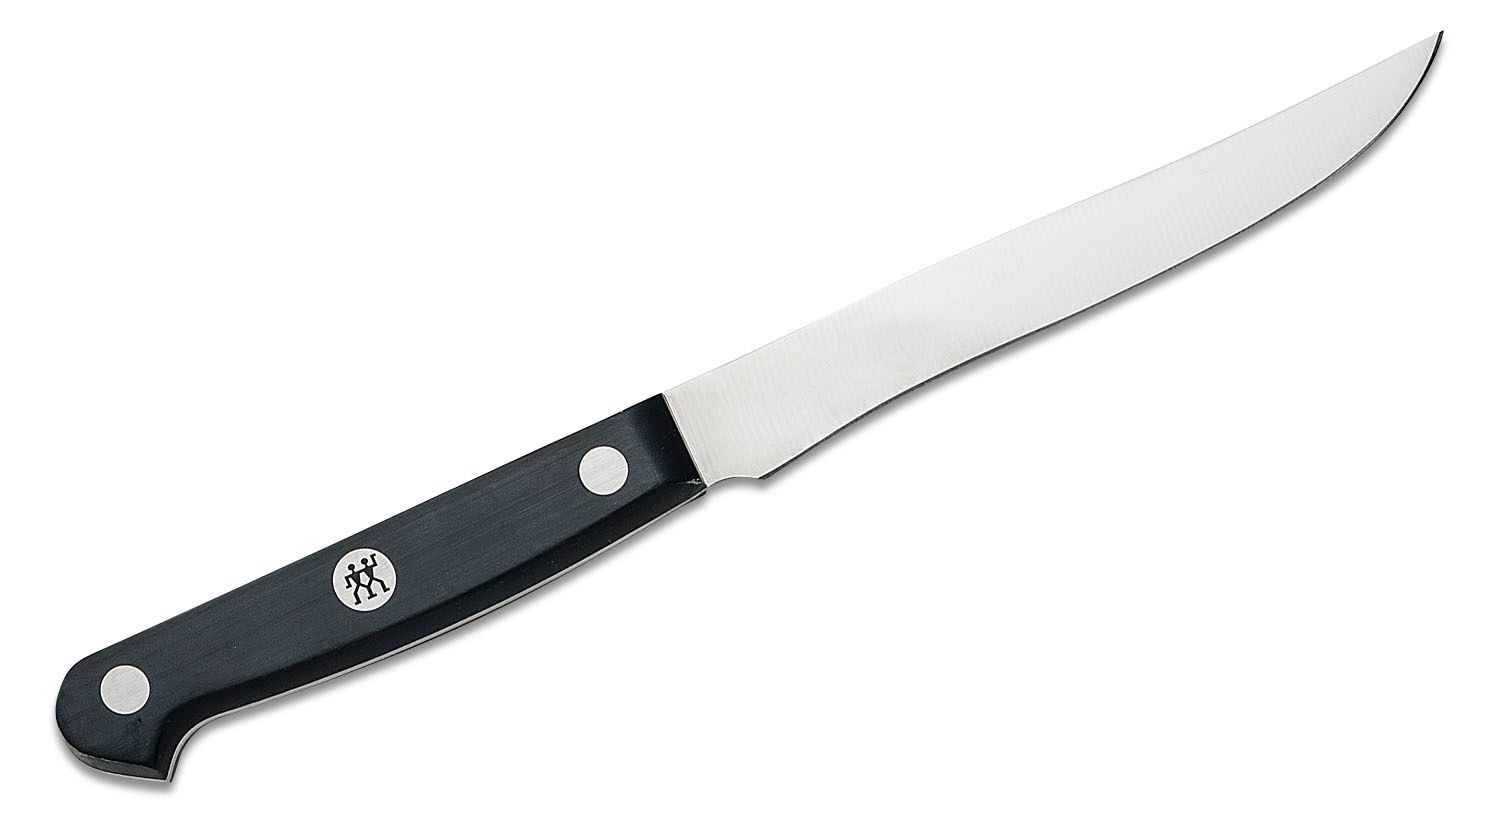 Case Set of Four Steak Knives - KnifeCenter - 00824 - Discontinued